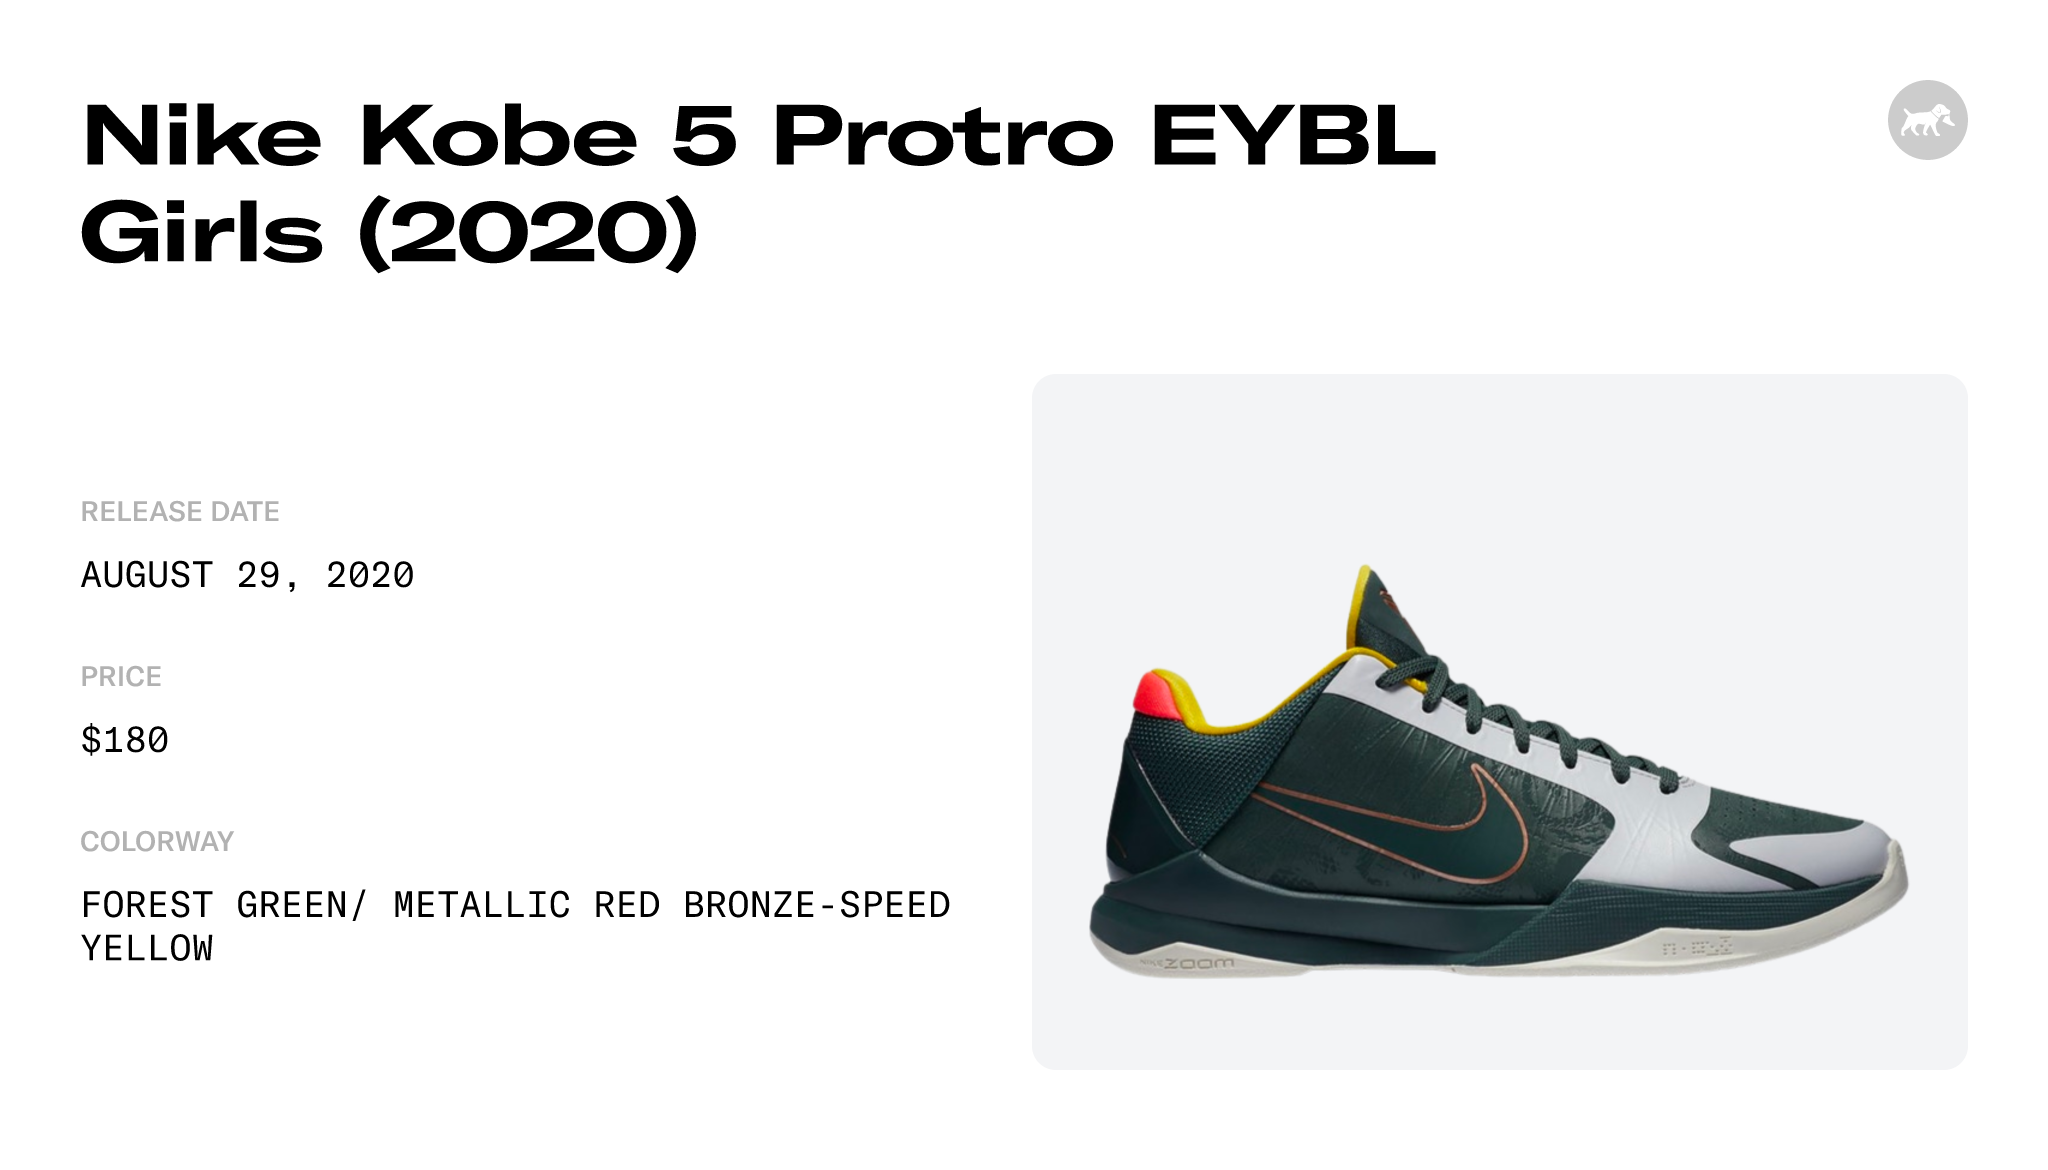 Nike Kobe 5 Protro EYBL Girls (2020) - CD4991-300 Raffles and Release Date